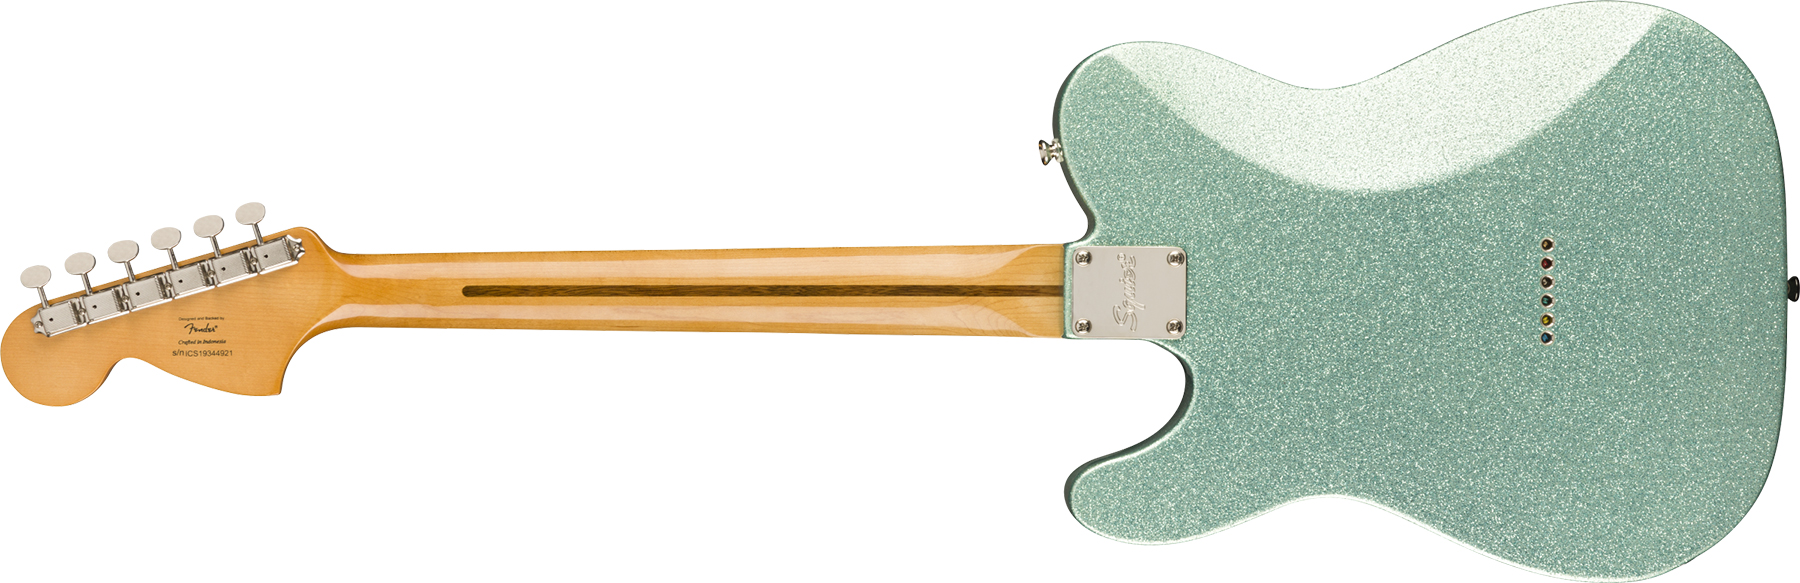 Squier Tele Deluxe Classic Vibe 70 Fsr Ltd 2020 Hh Htmn - Seafoam Sparkle - Guitarra eléctrica con forma de tel - Variation 1